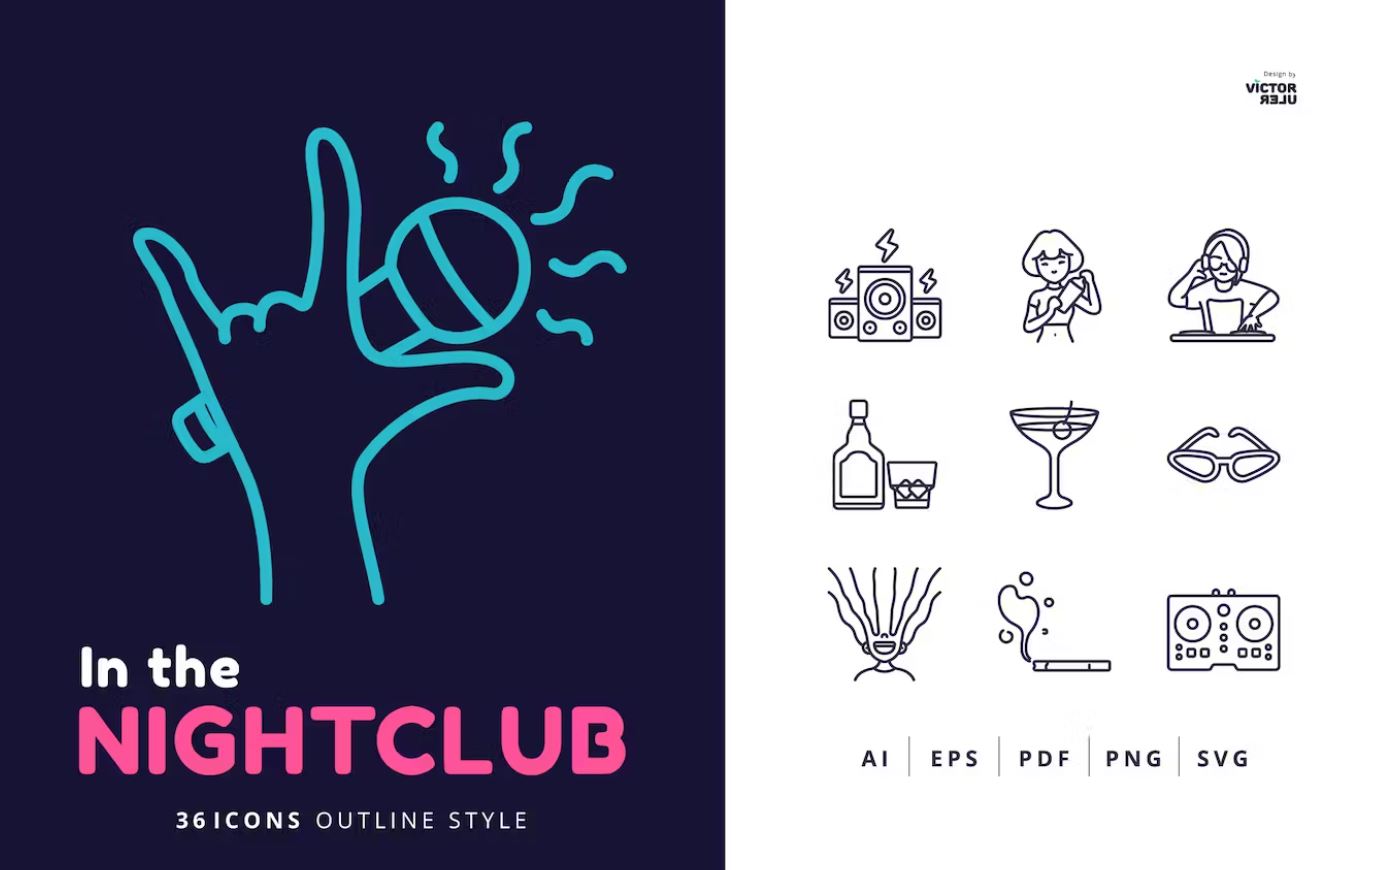 Nightclub-Icons-neon